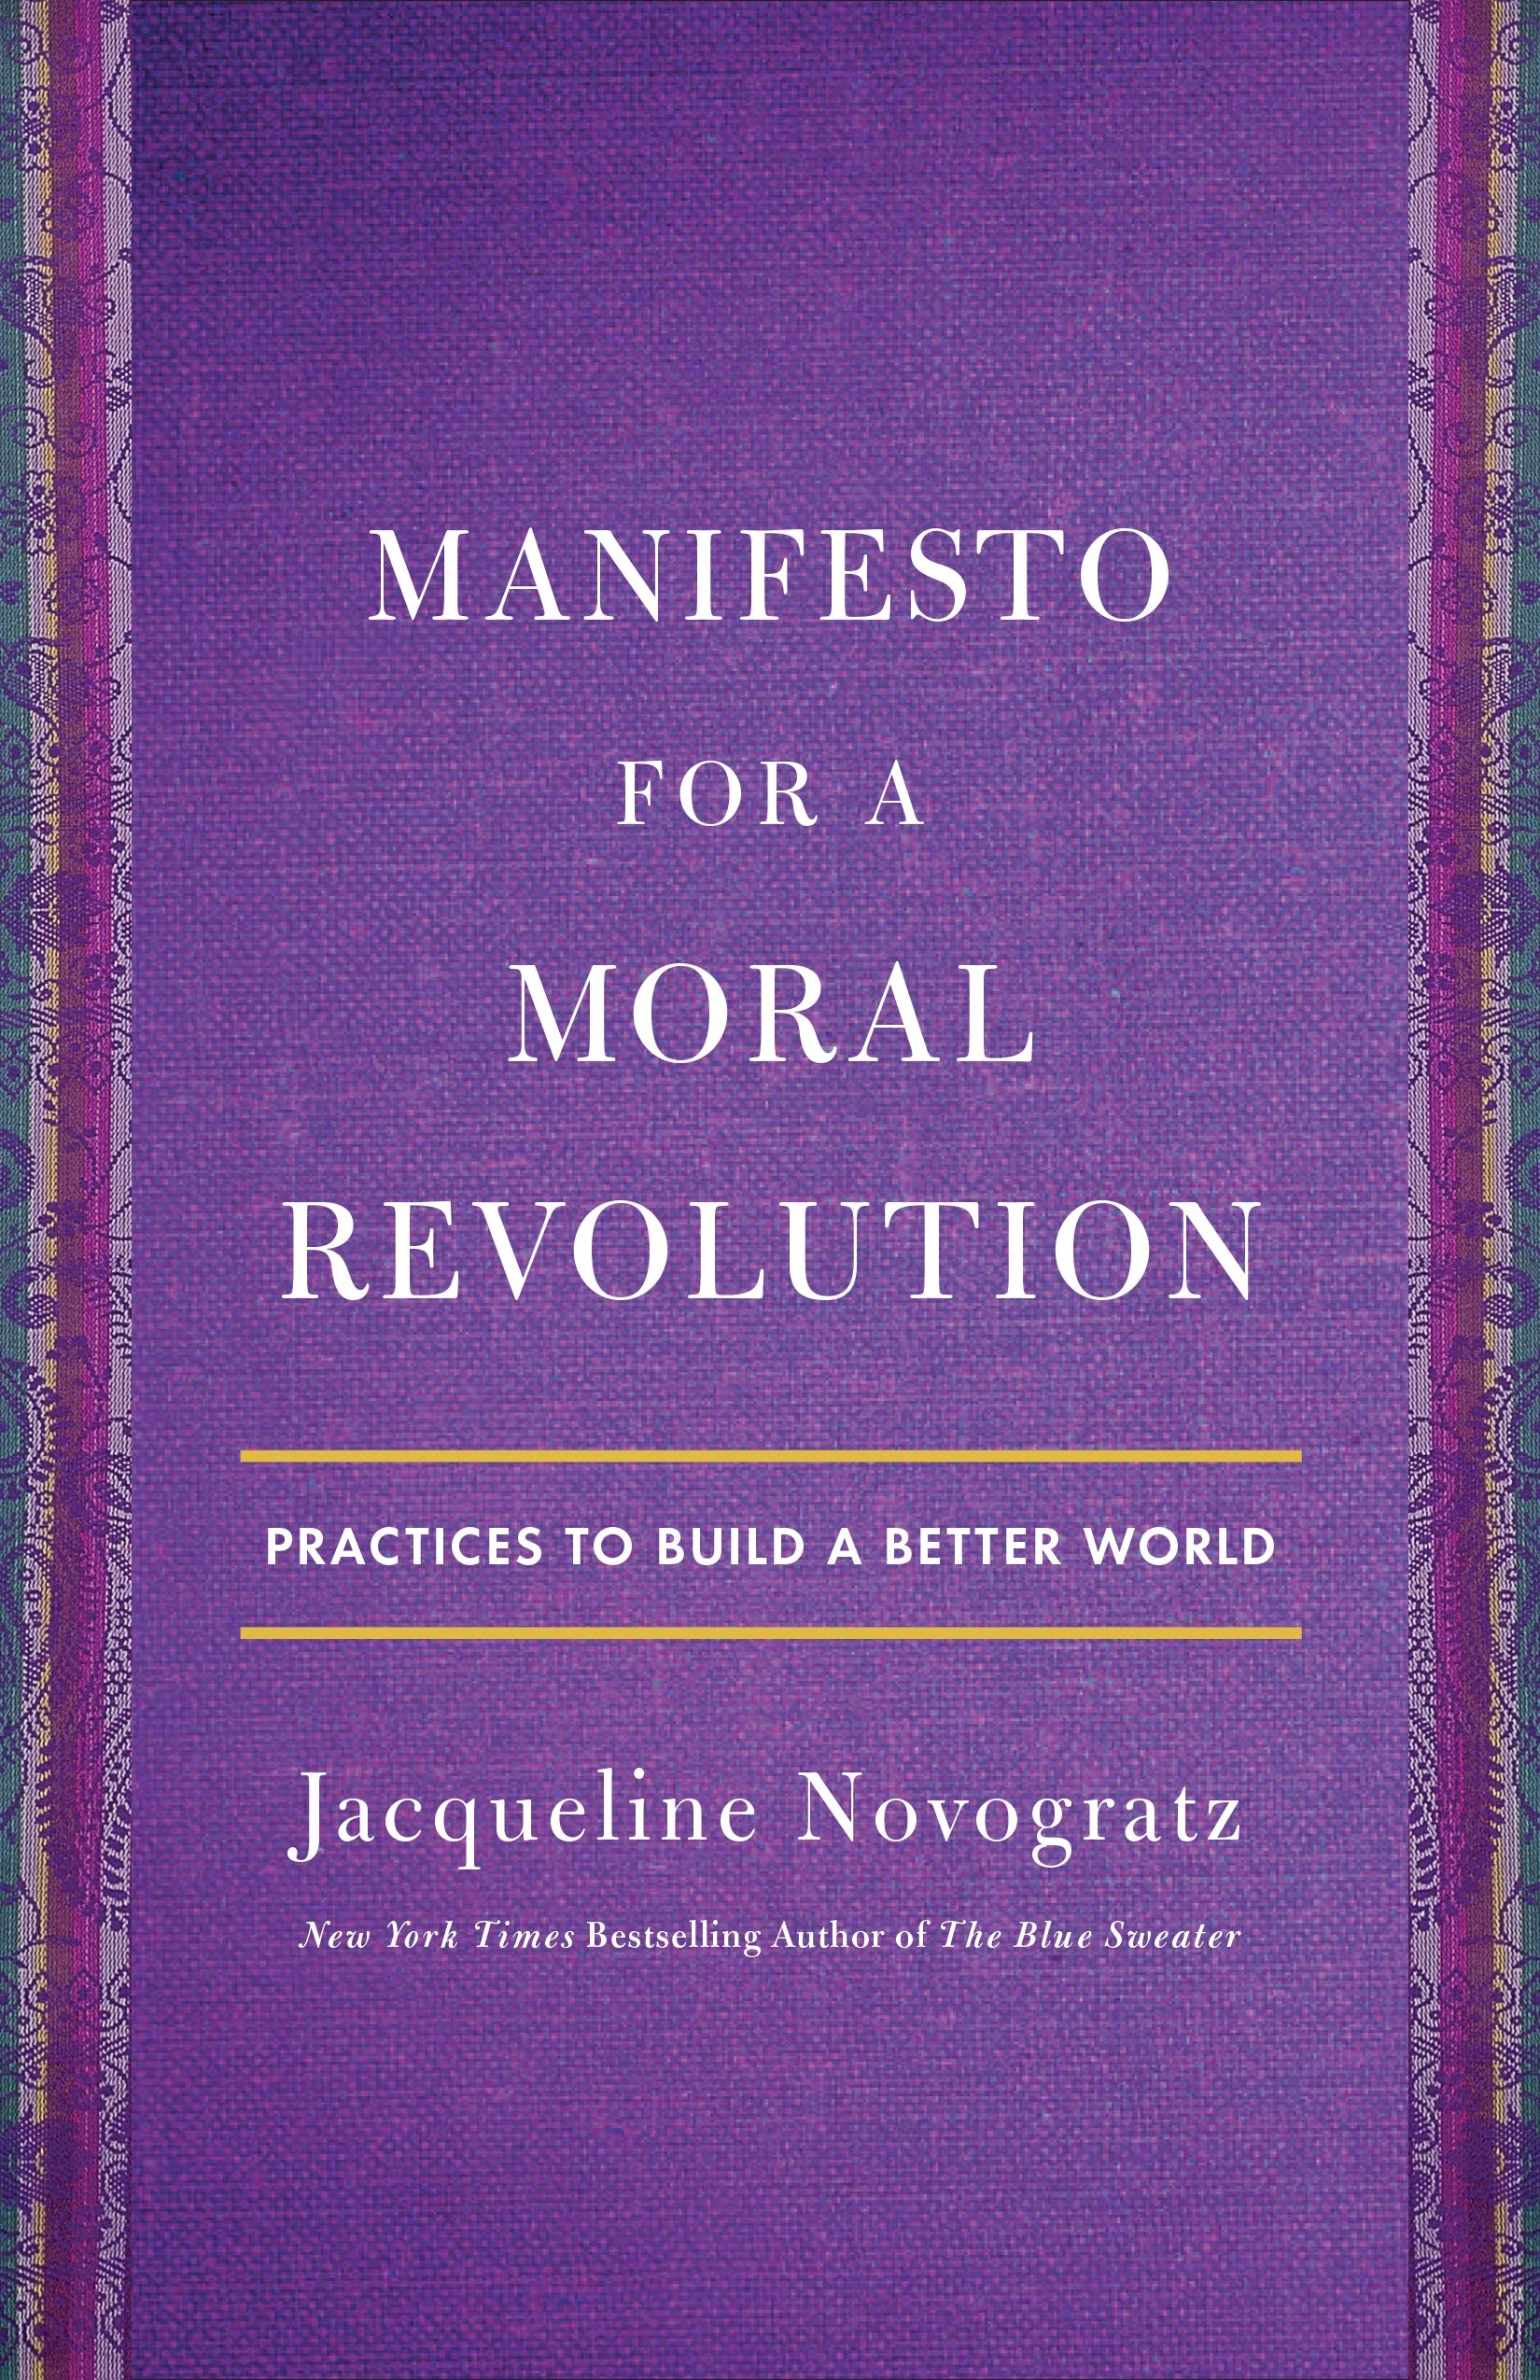 Manifesto for a moral revolution by Jacqueline Novogratz